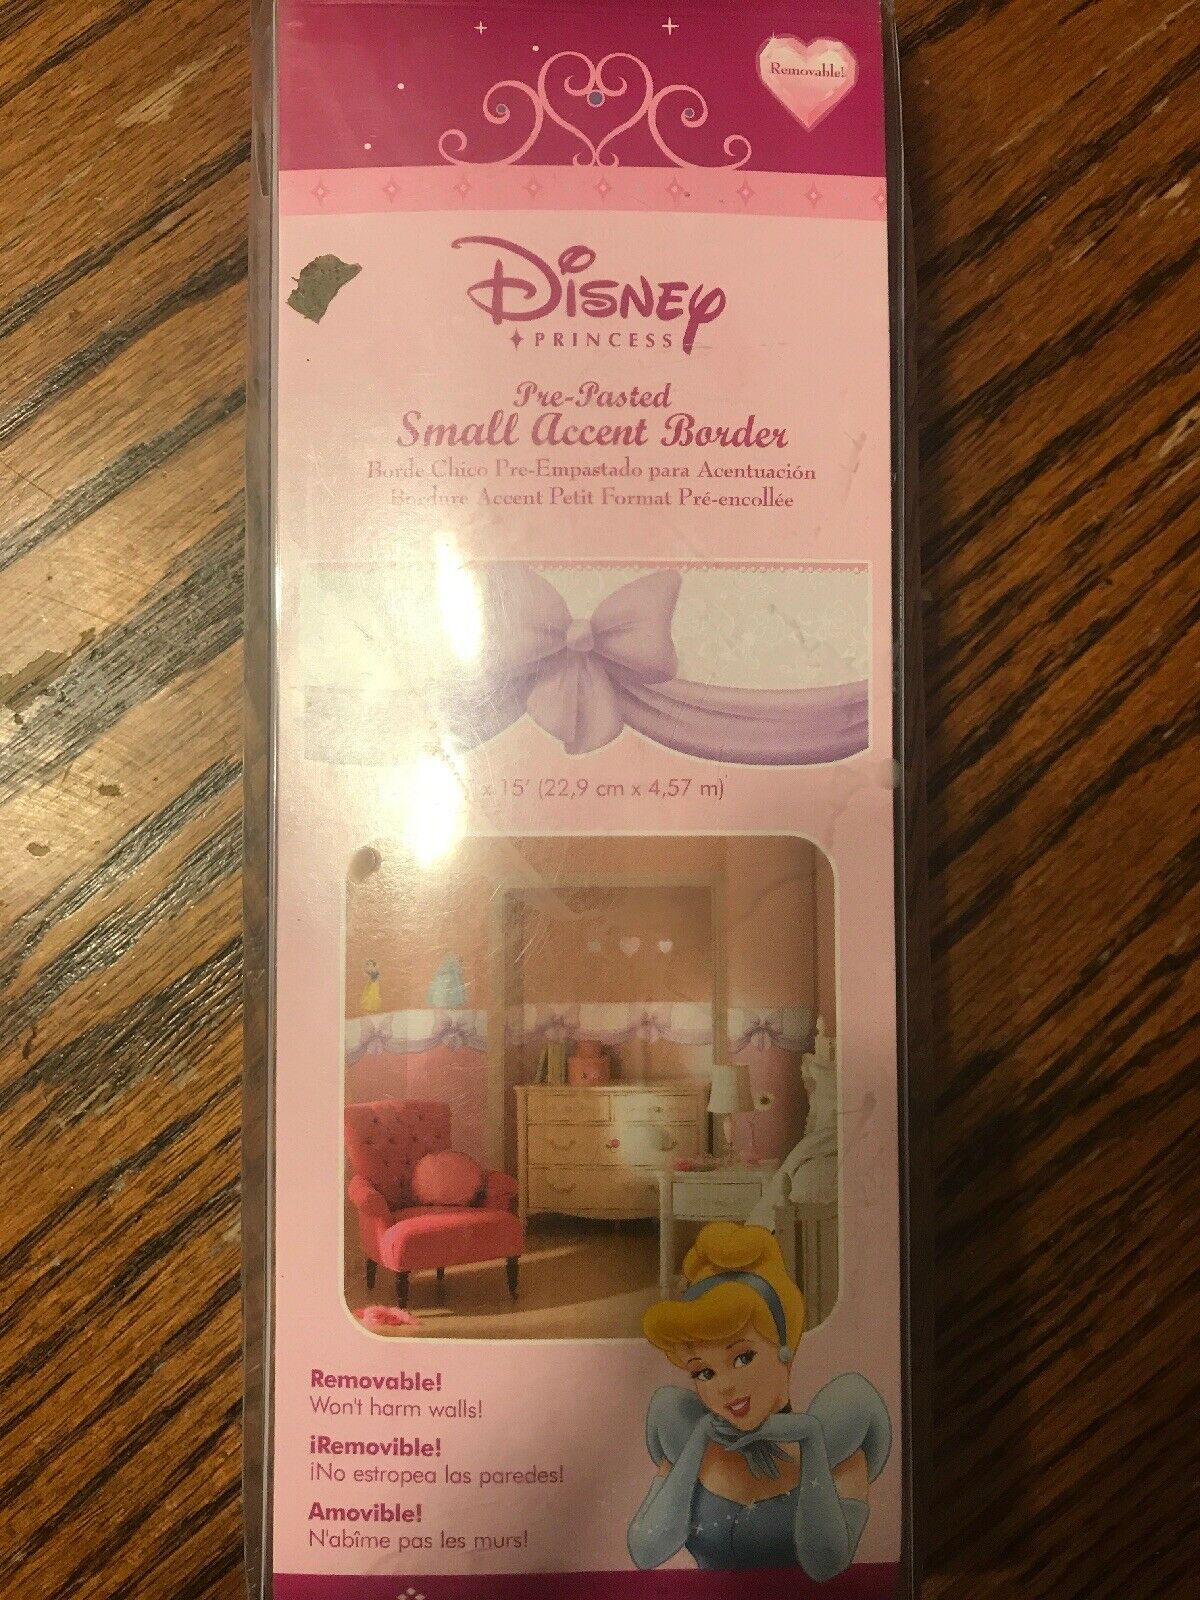 Disney Princess - HD Wallpaper 